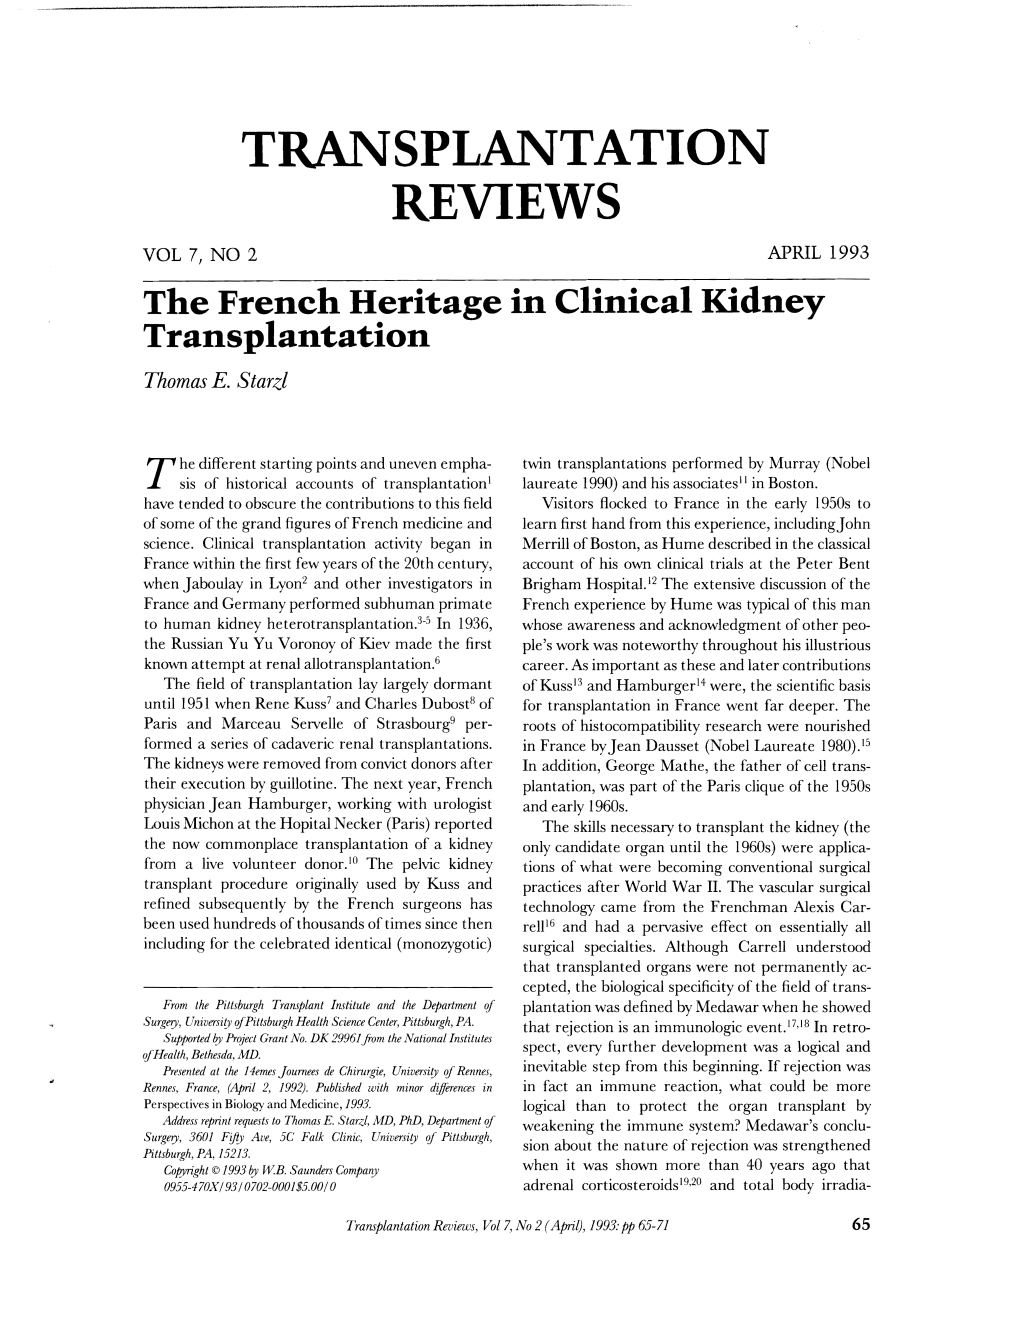 TRANSPLANTATION REVIEWS VOL 7, NO 2 APRIL 1993 the French Heritage in Clinical Kidney Transplantation Thomas E